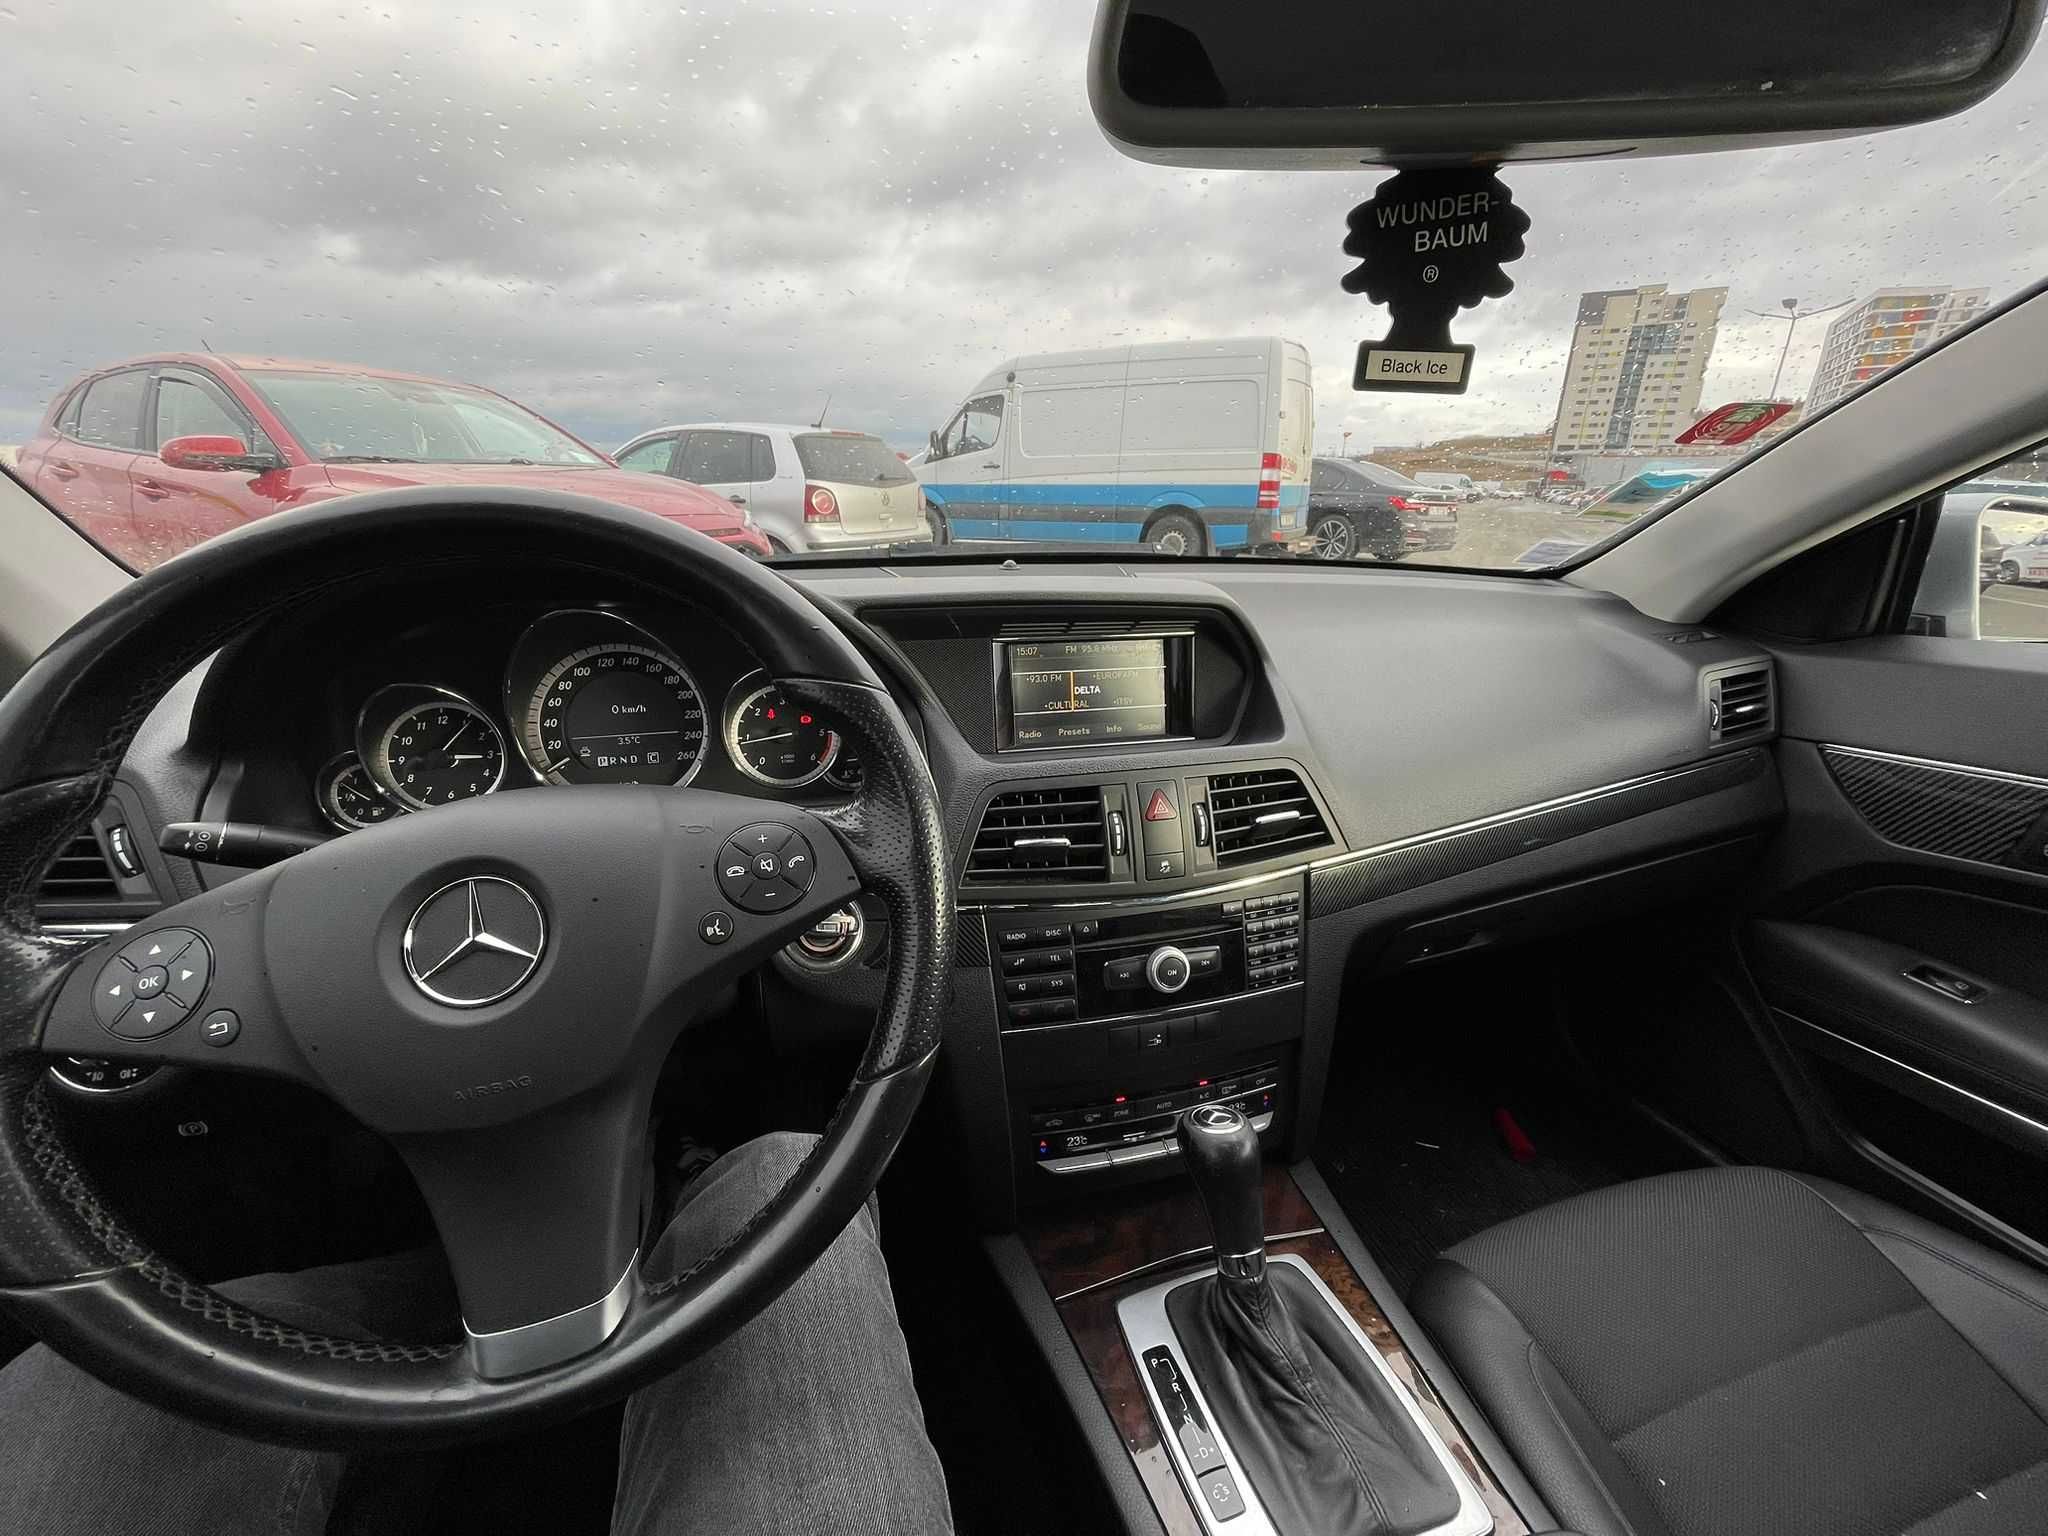 Mercedes-Benz E220 CDI Coupe sau schimb